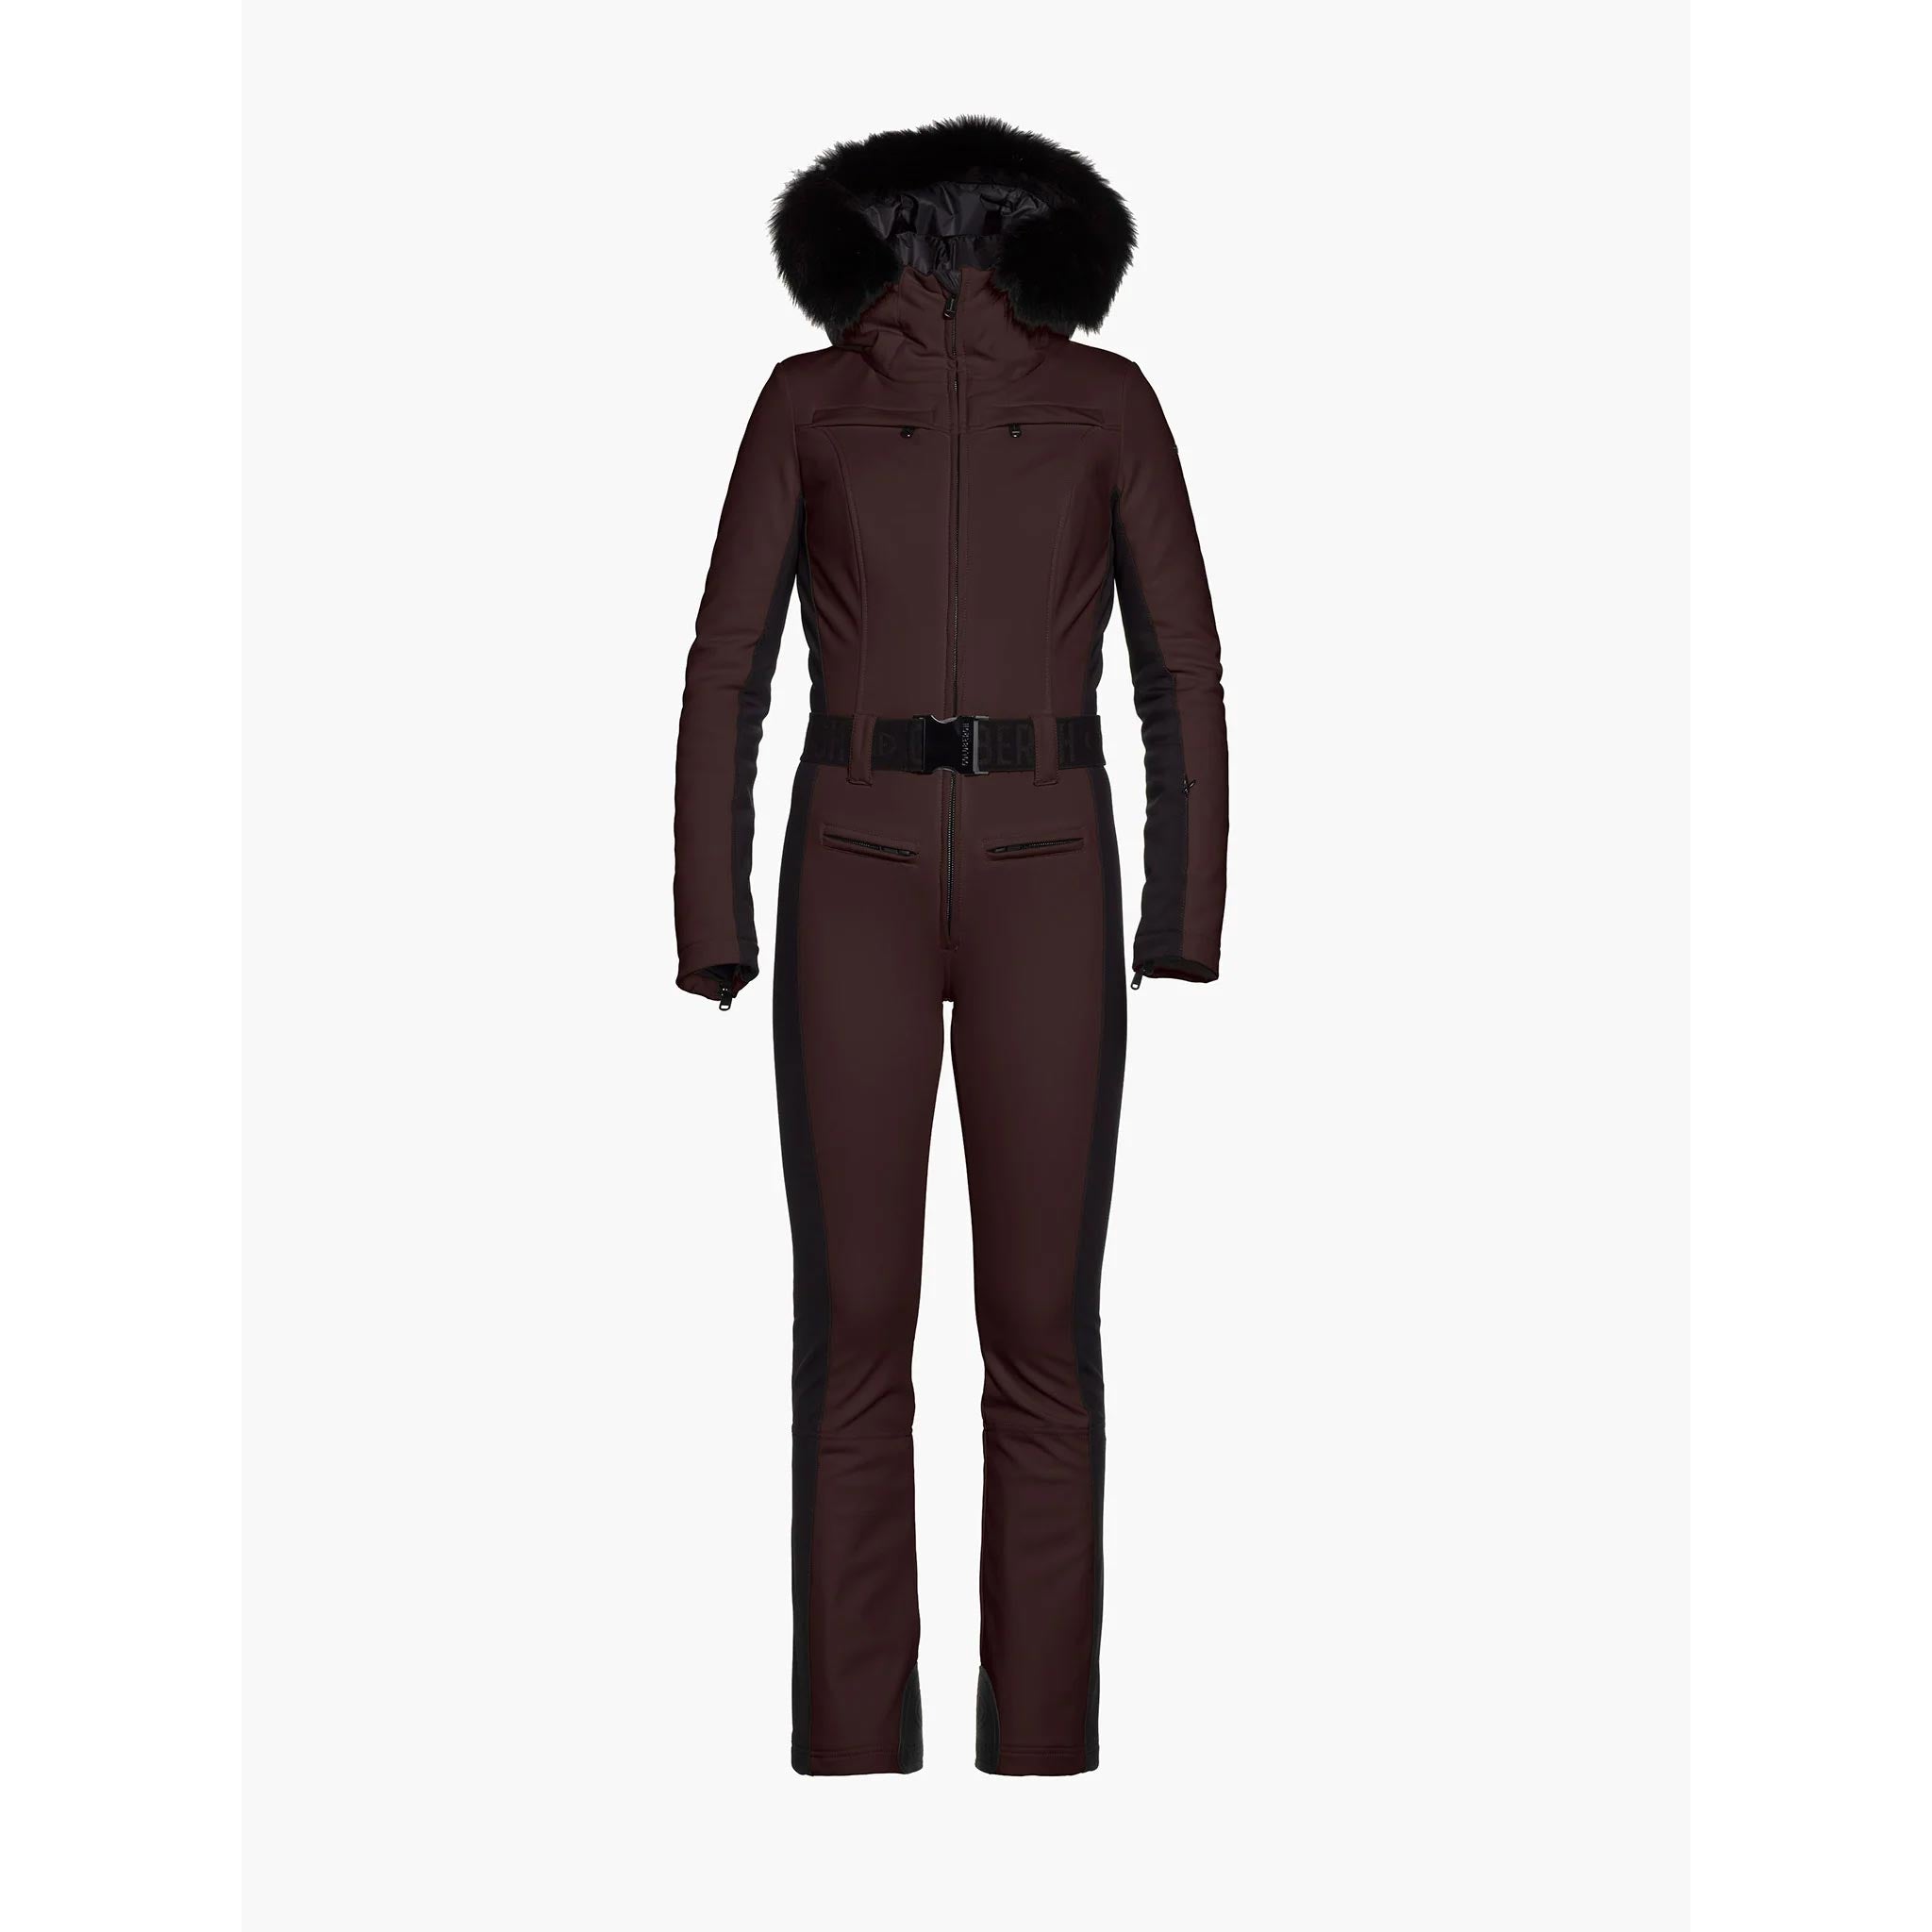 Parry Ski Suit in Dark Brown